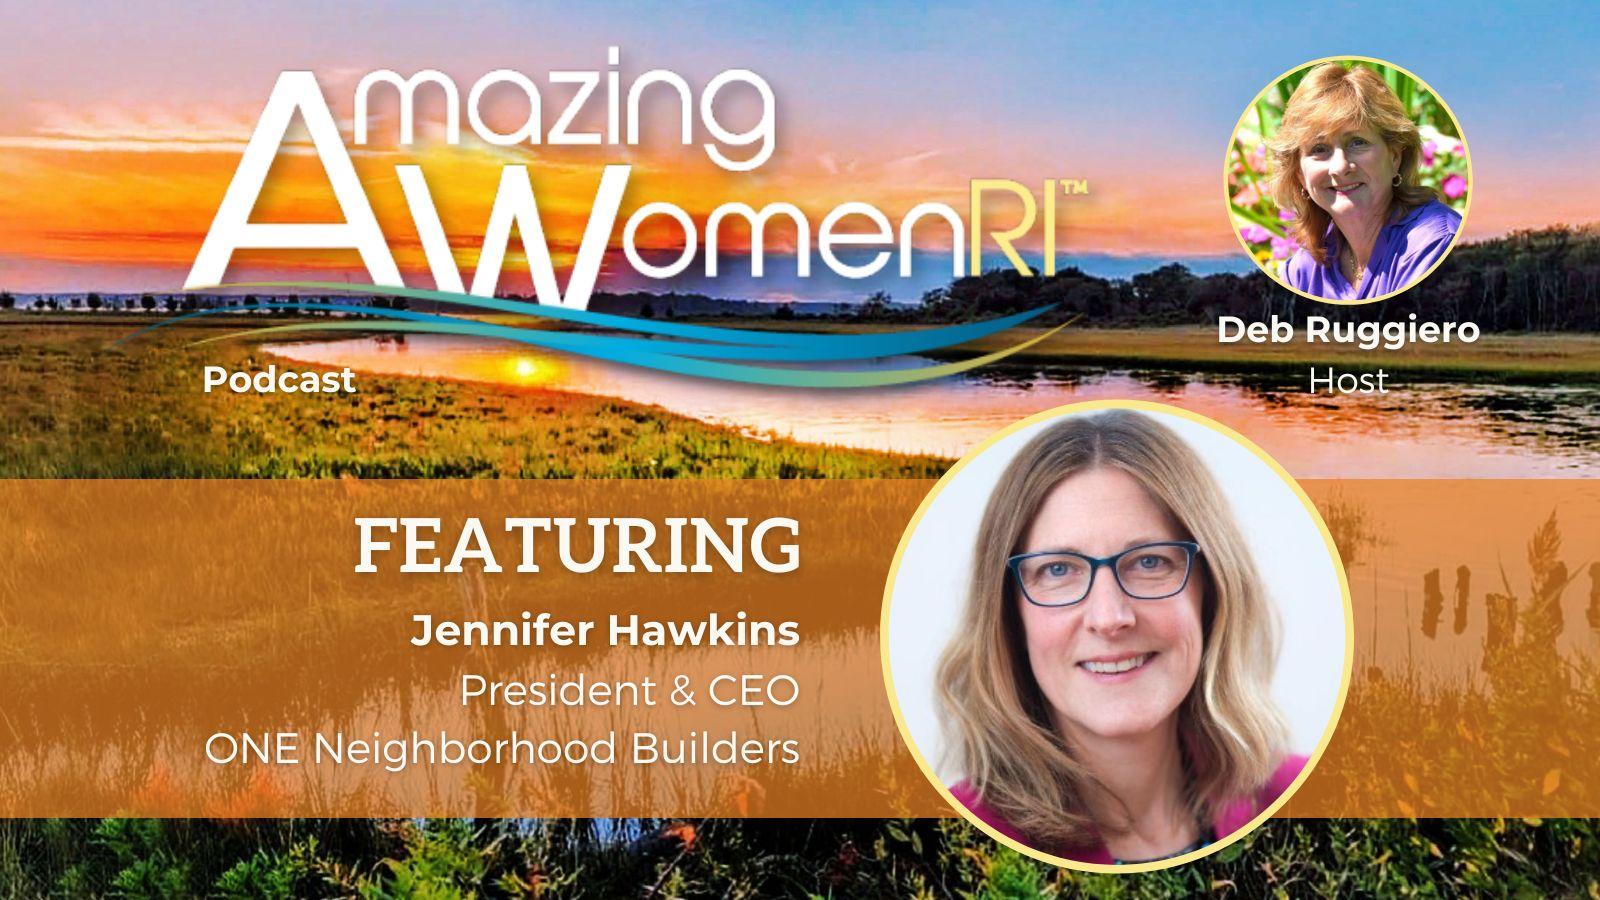 Jennifer Hawkins on podcast called Amazing Women RI, by host Deb Ruggiero.